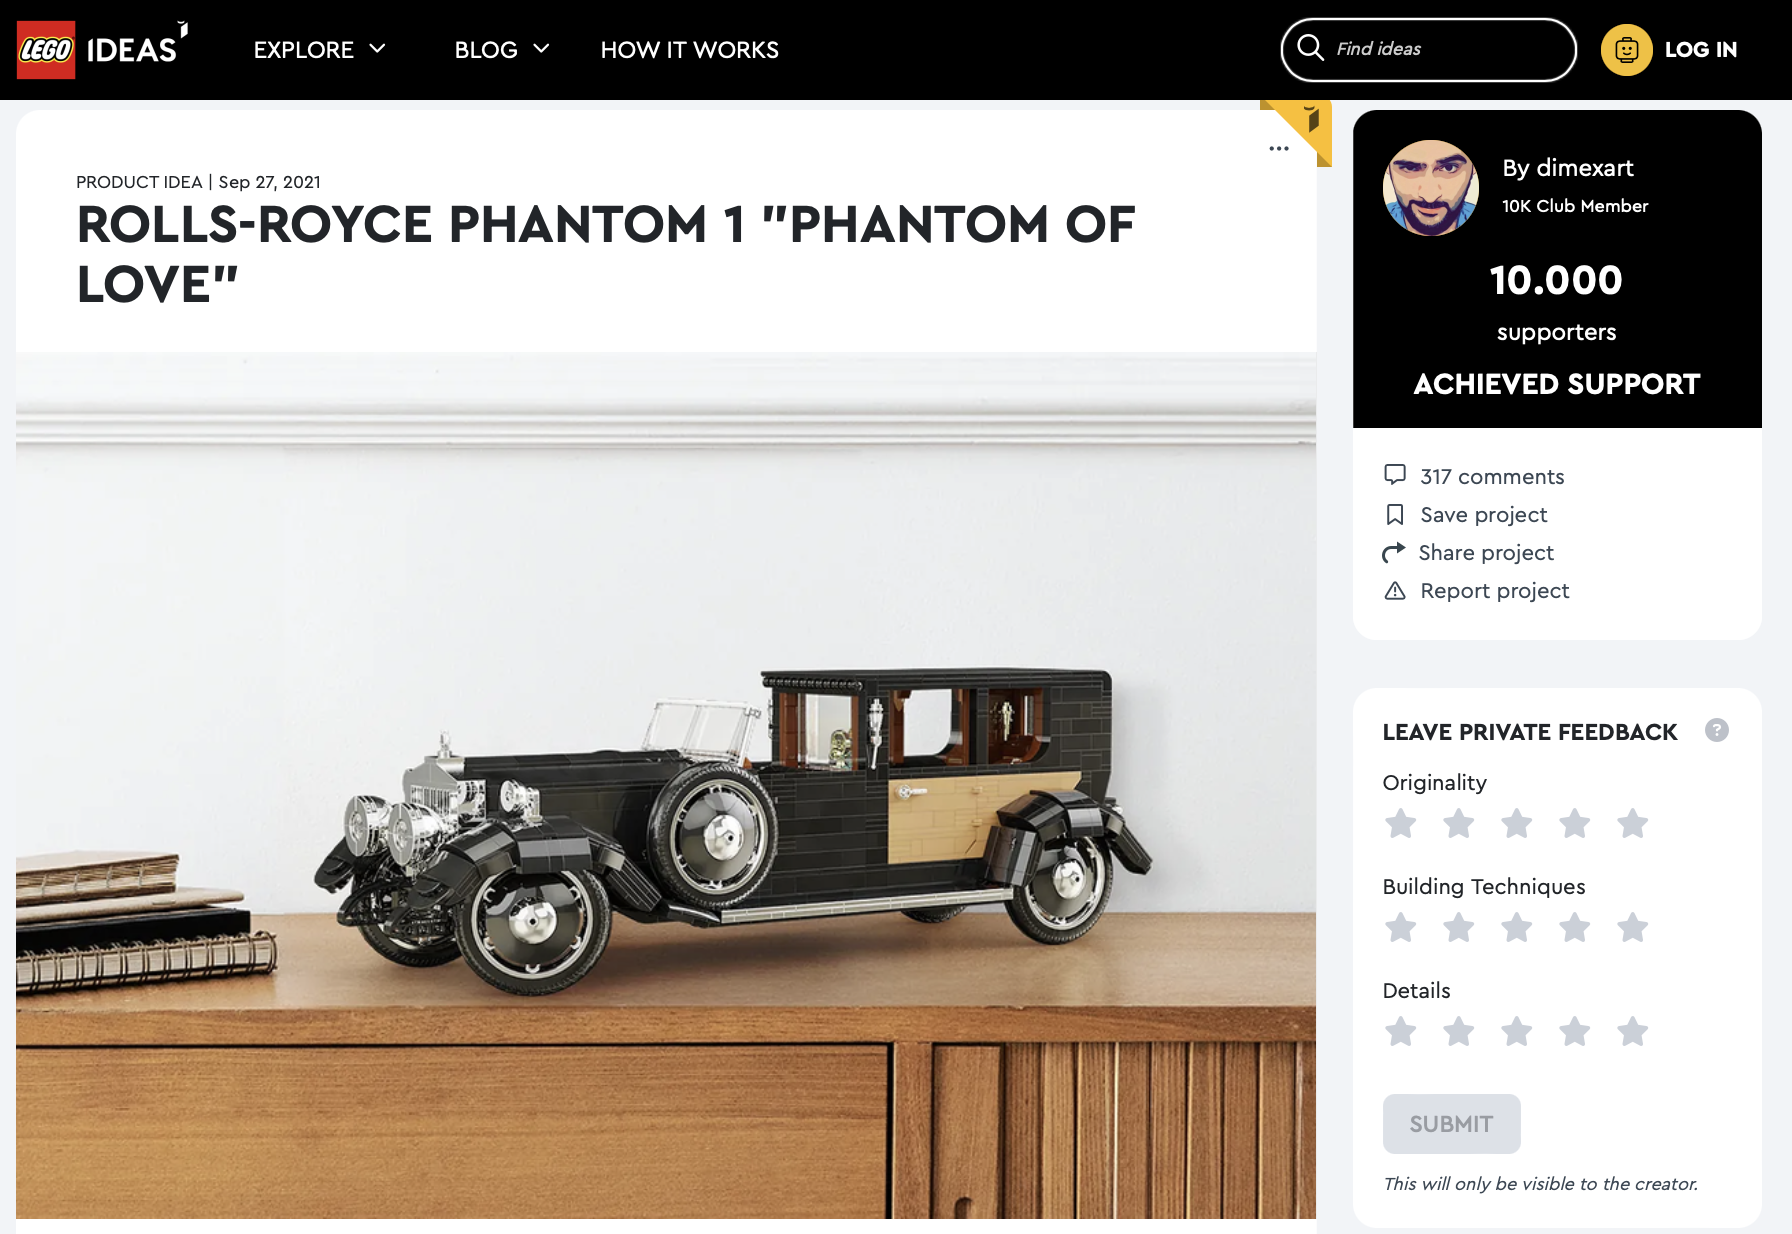 Rolls-Royce Phantom 1 “Phantom of Love” raggiunge i 10.000 like su LEGO Ideas